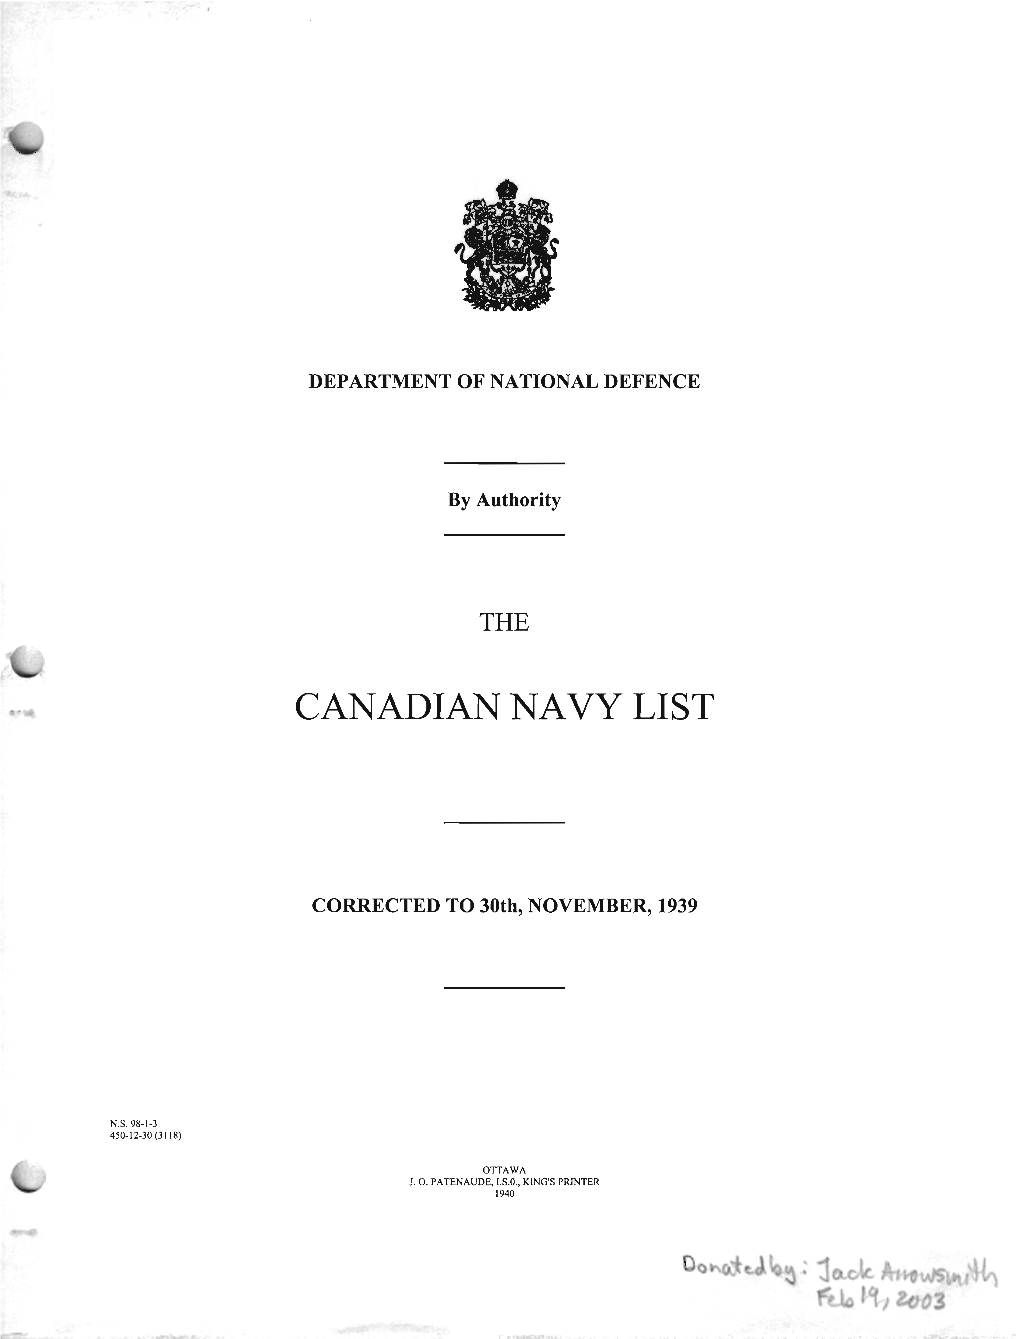 Canadian Navy List